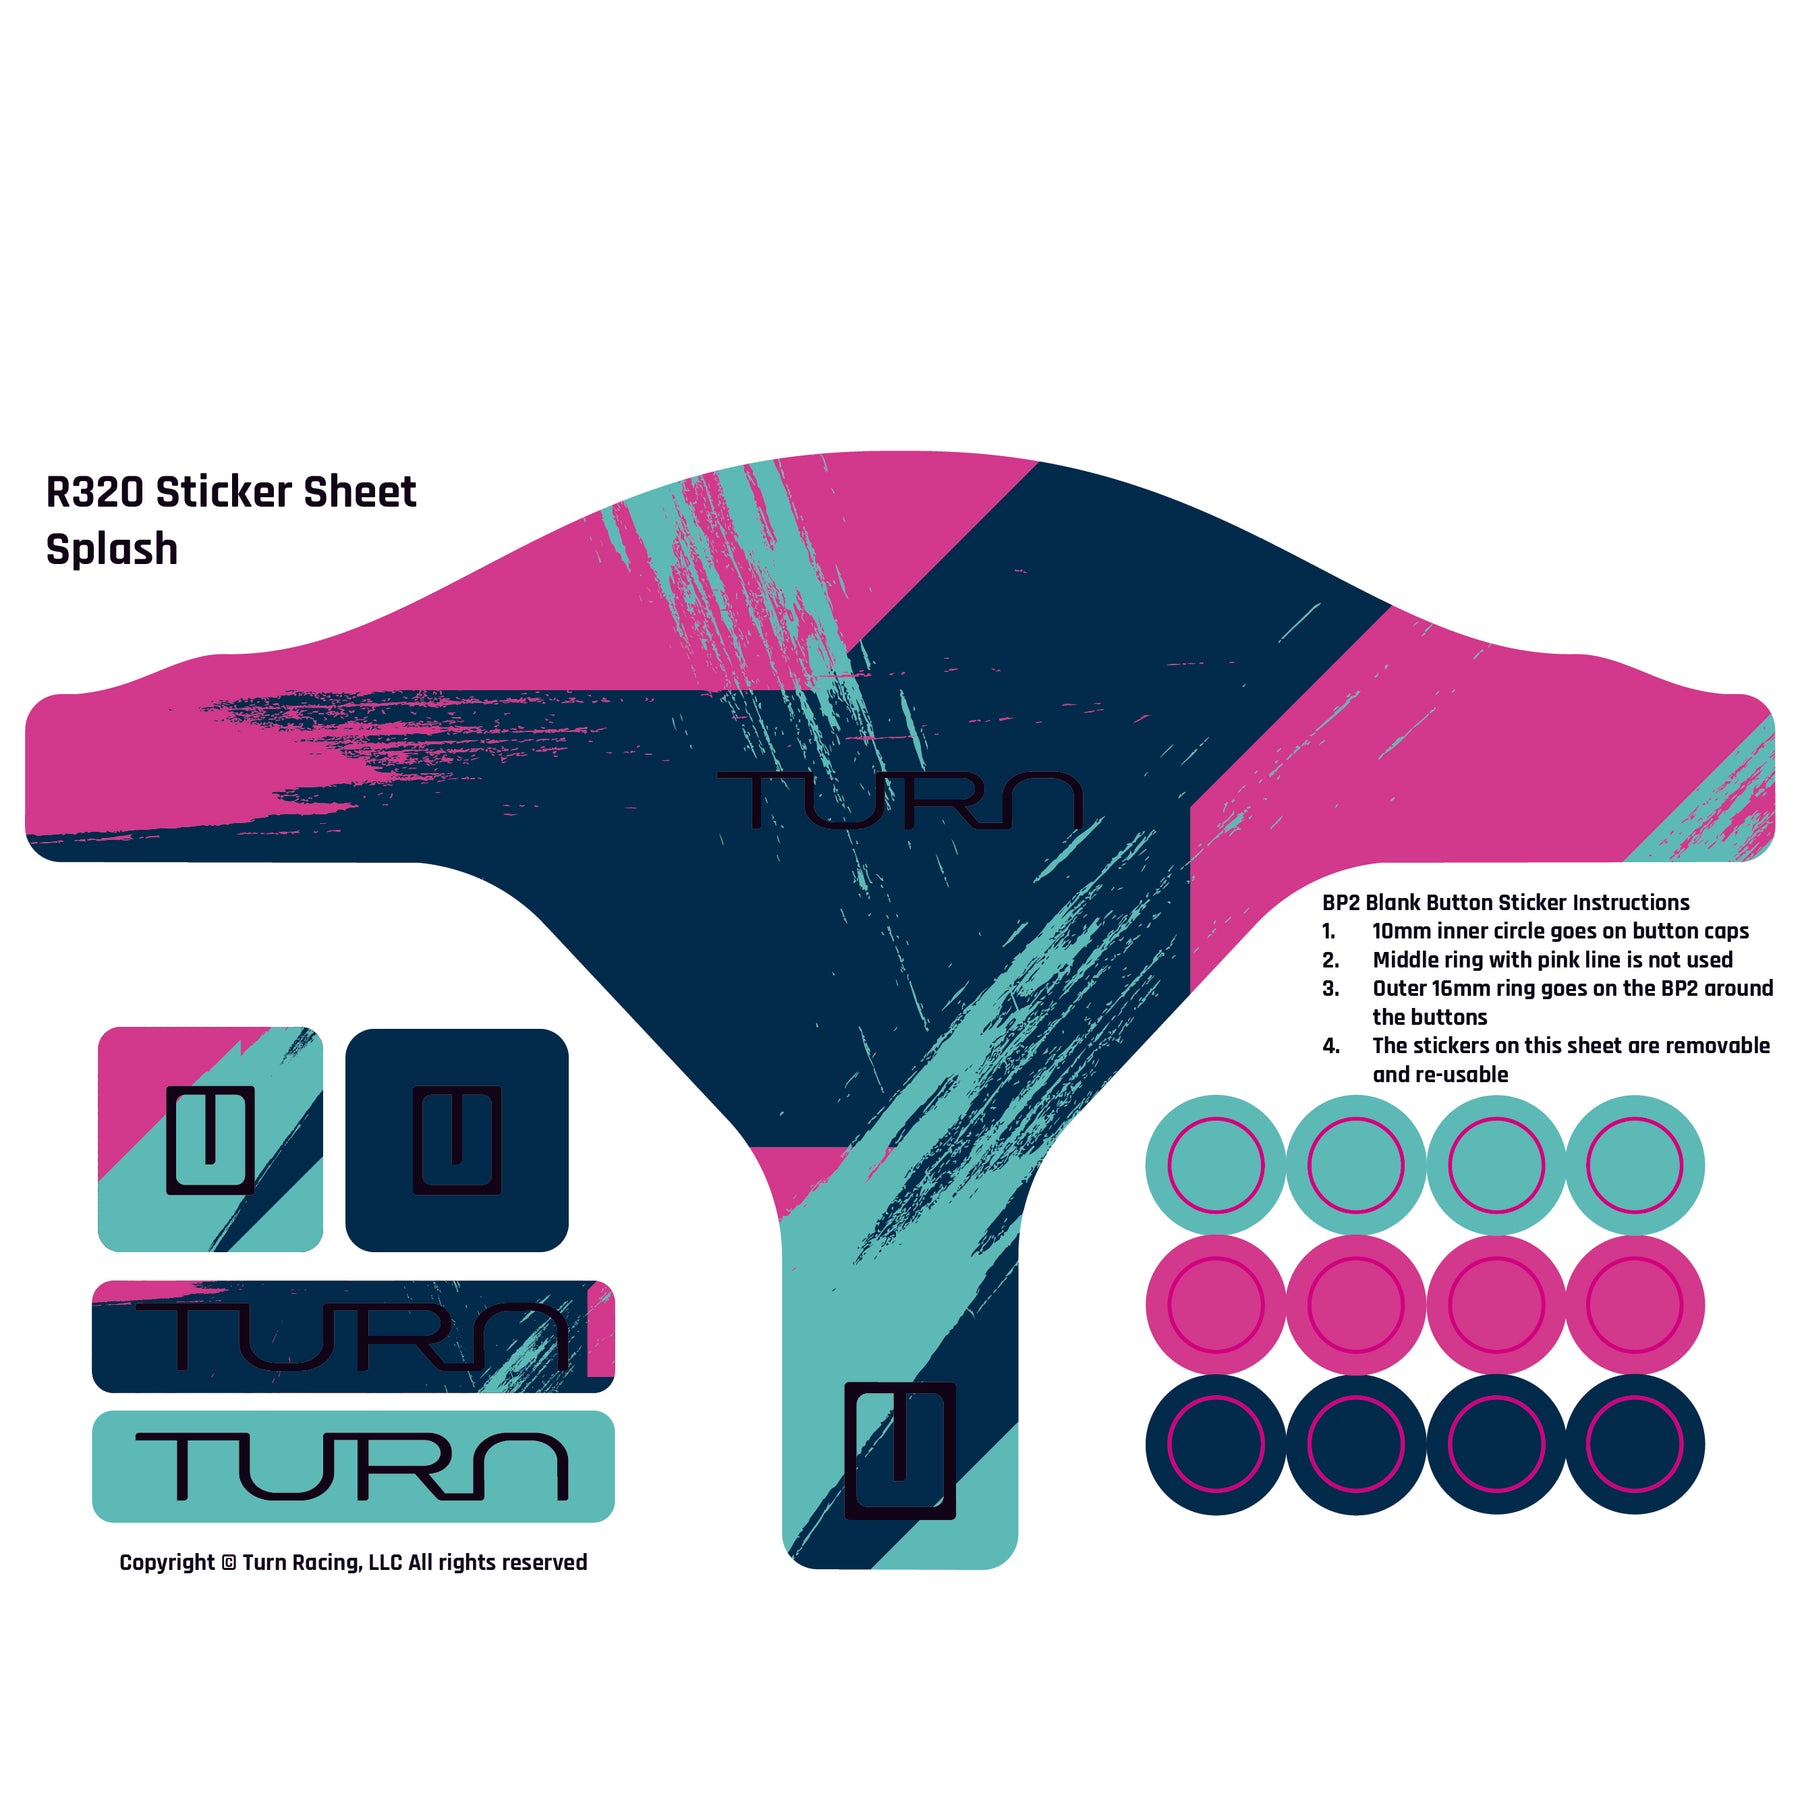 Turn R320 Sticker Sheet - Splash